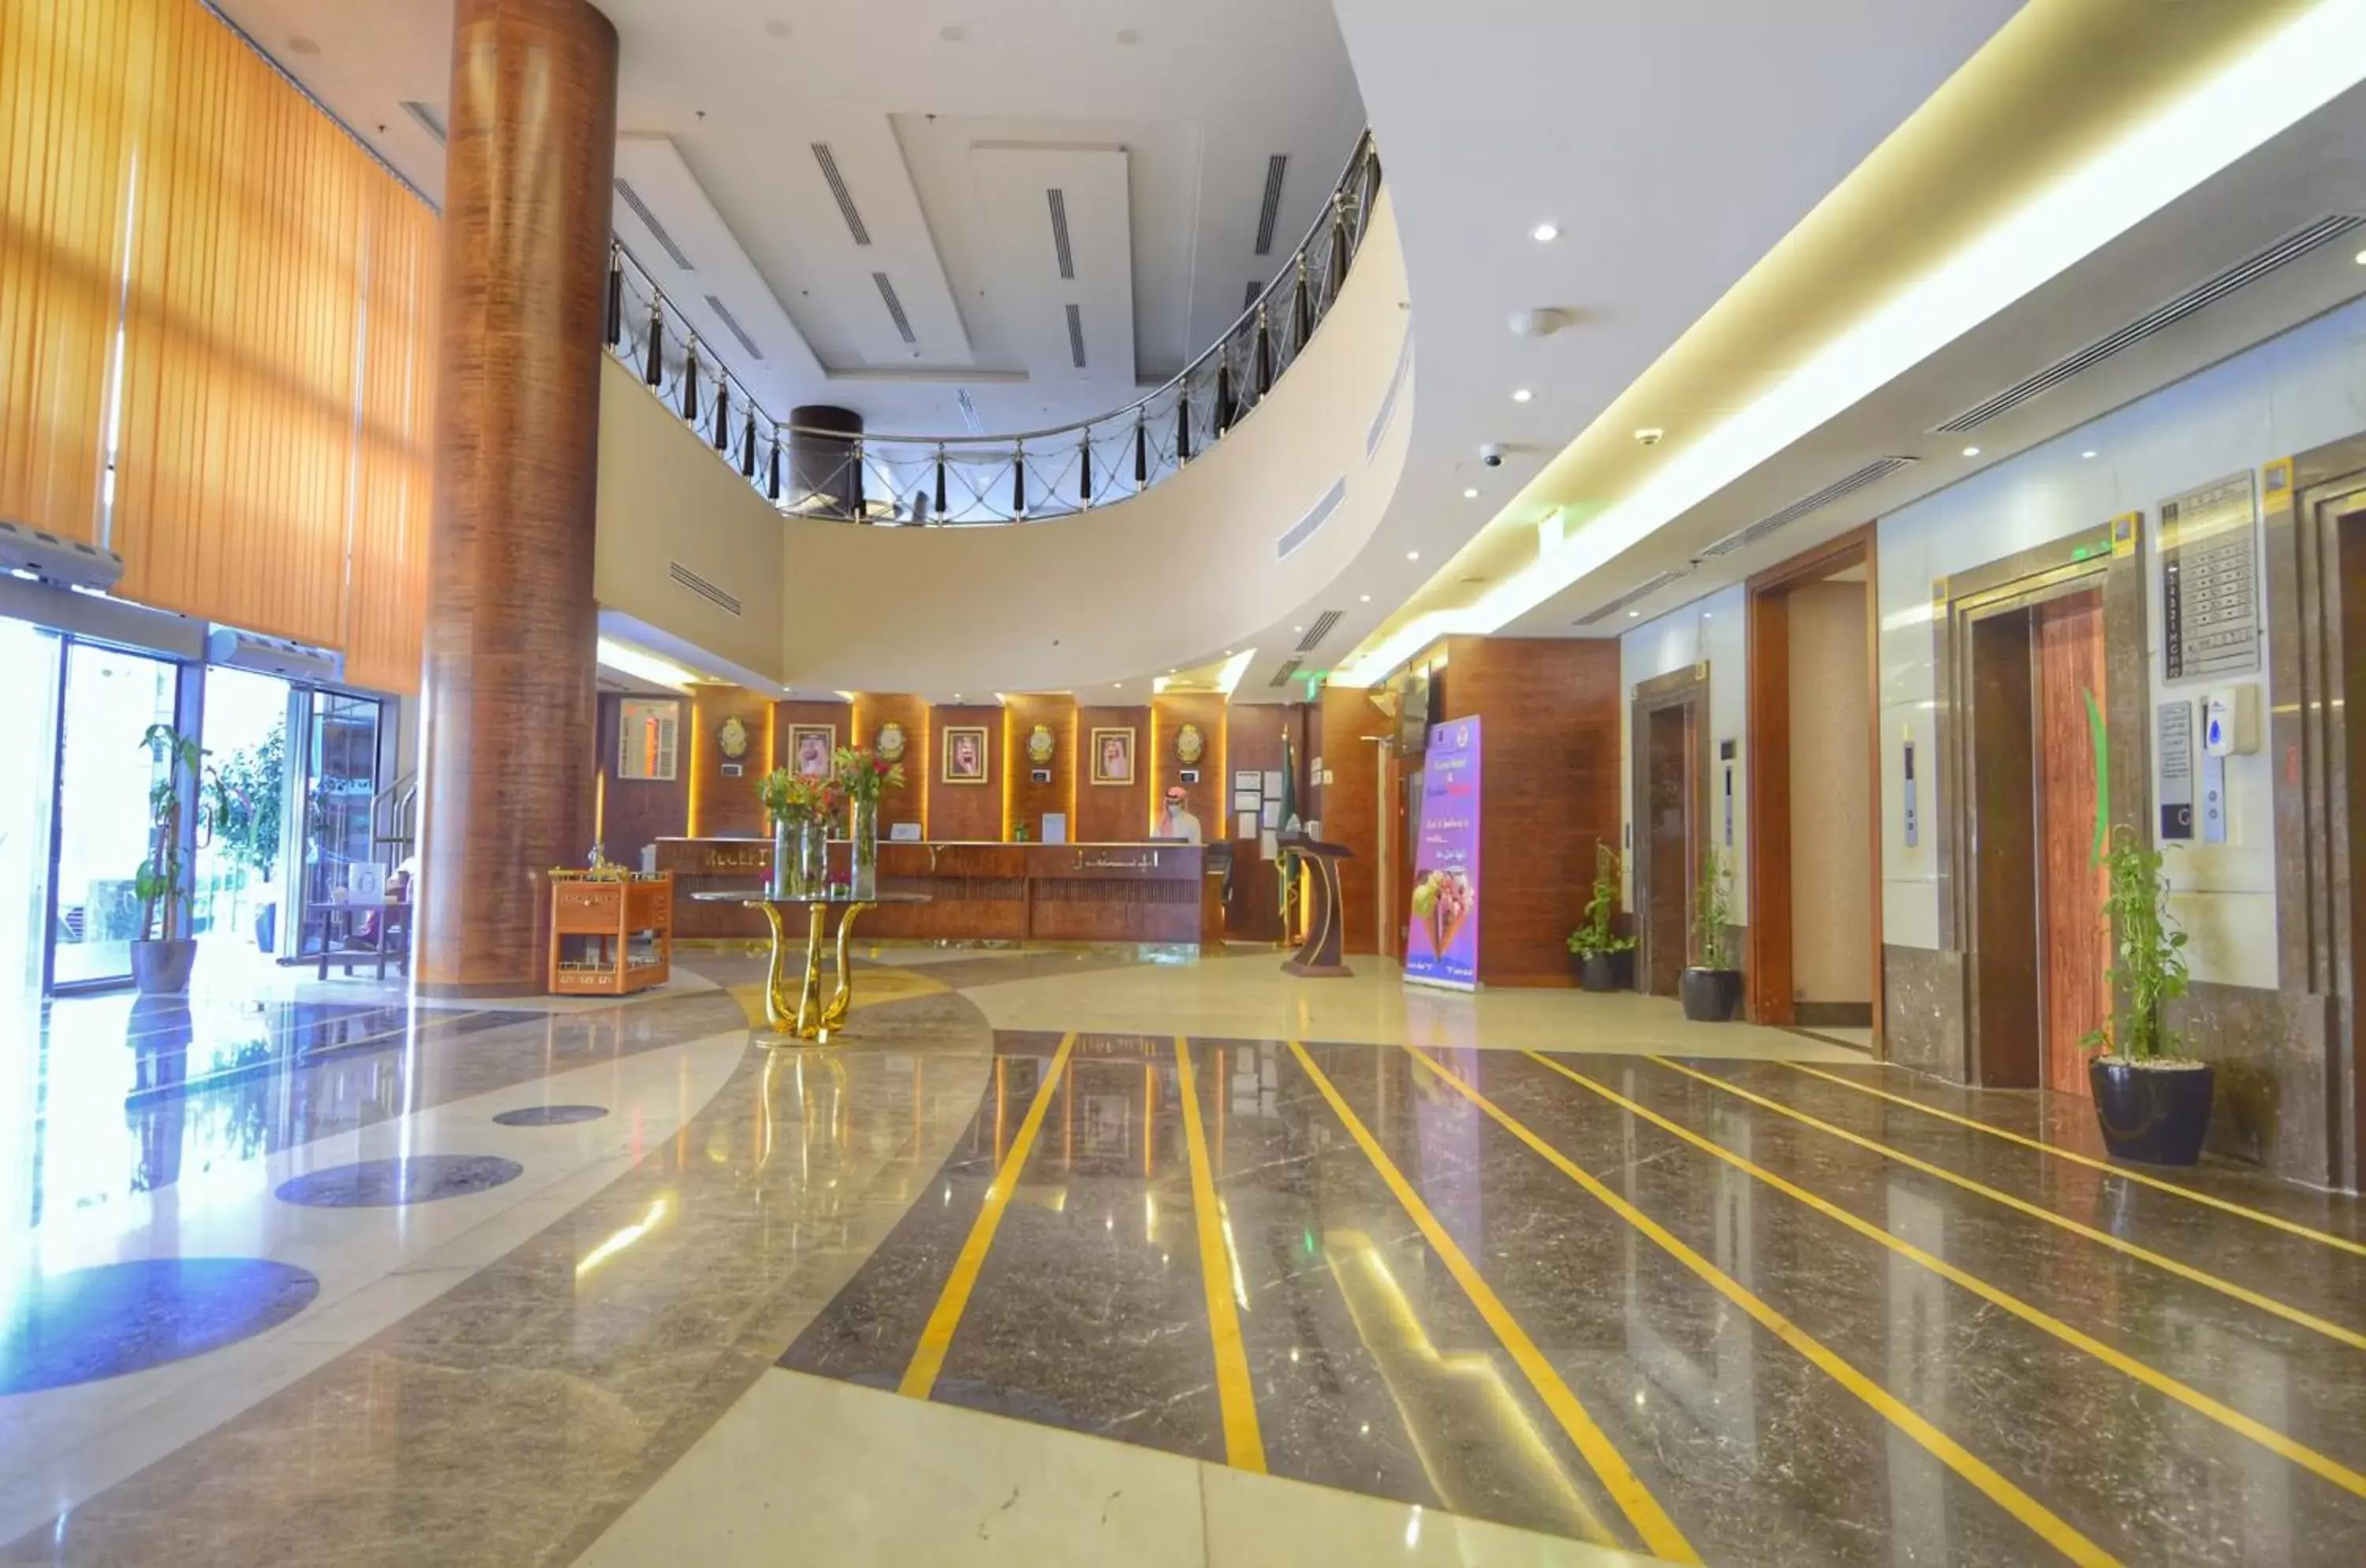 Lobby or reception in Ruve Jeddah Hotel